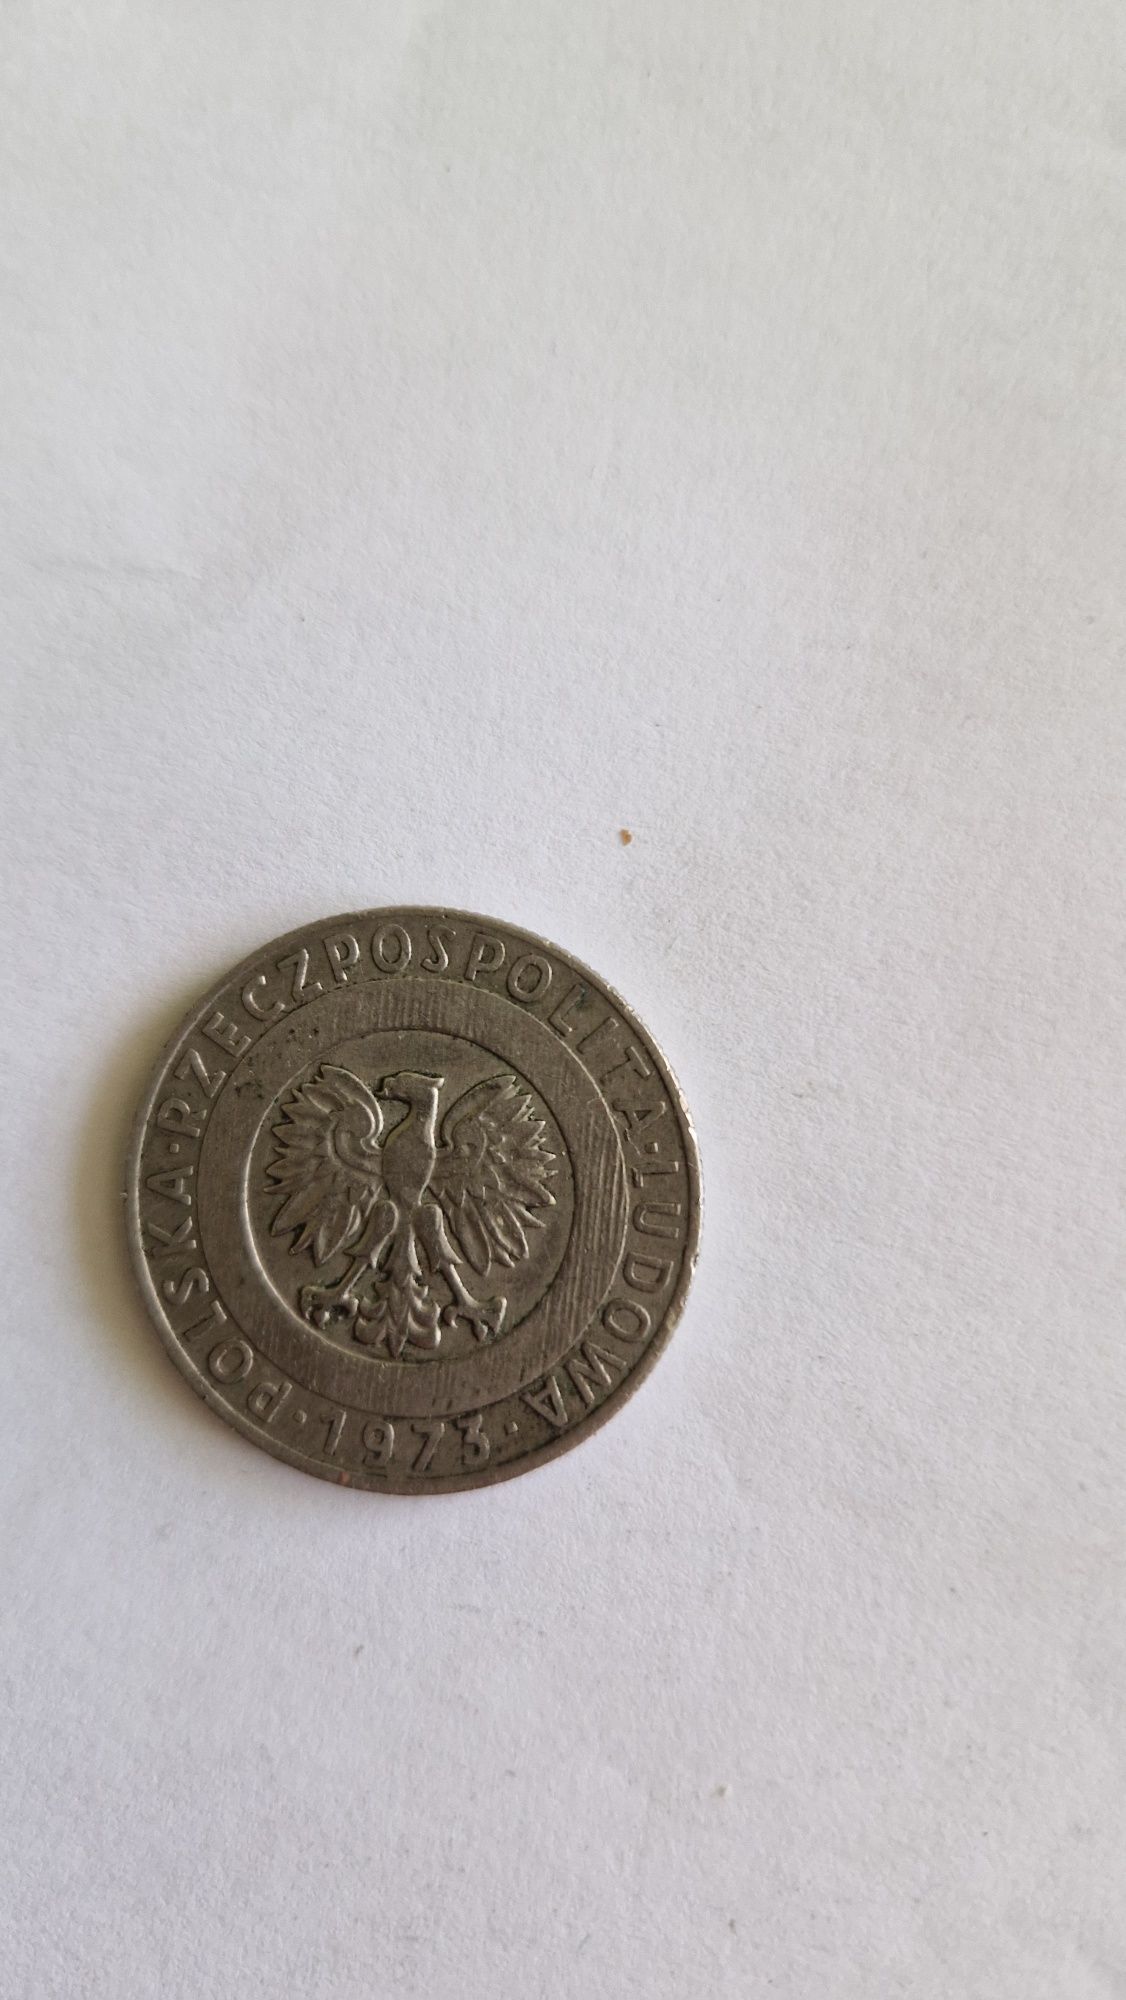 Moneta 20 zł. z 1973 r.